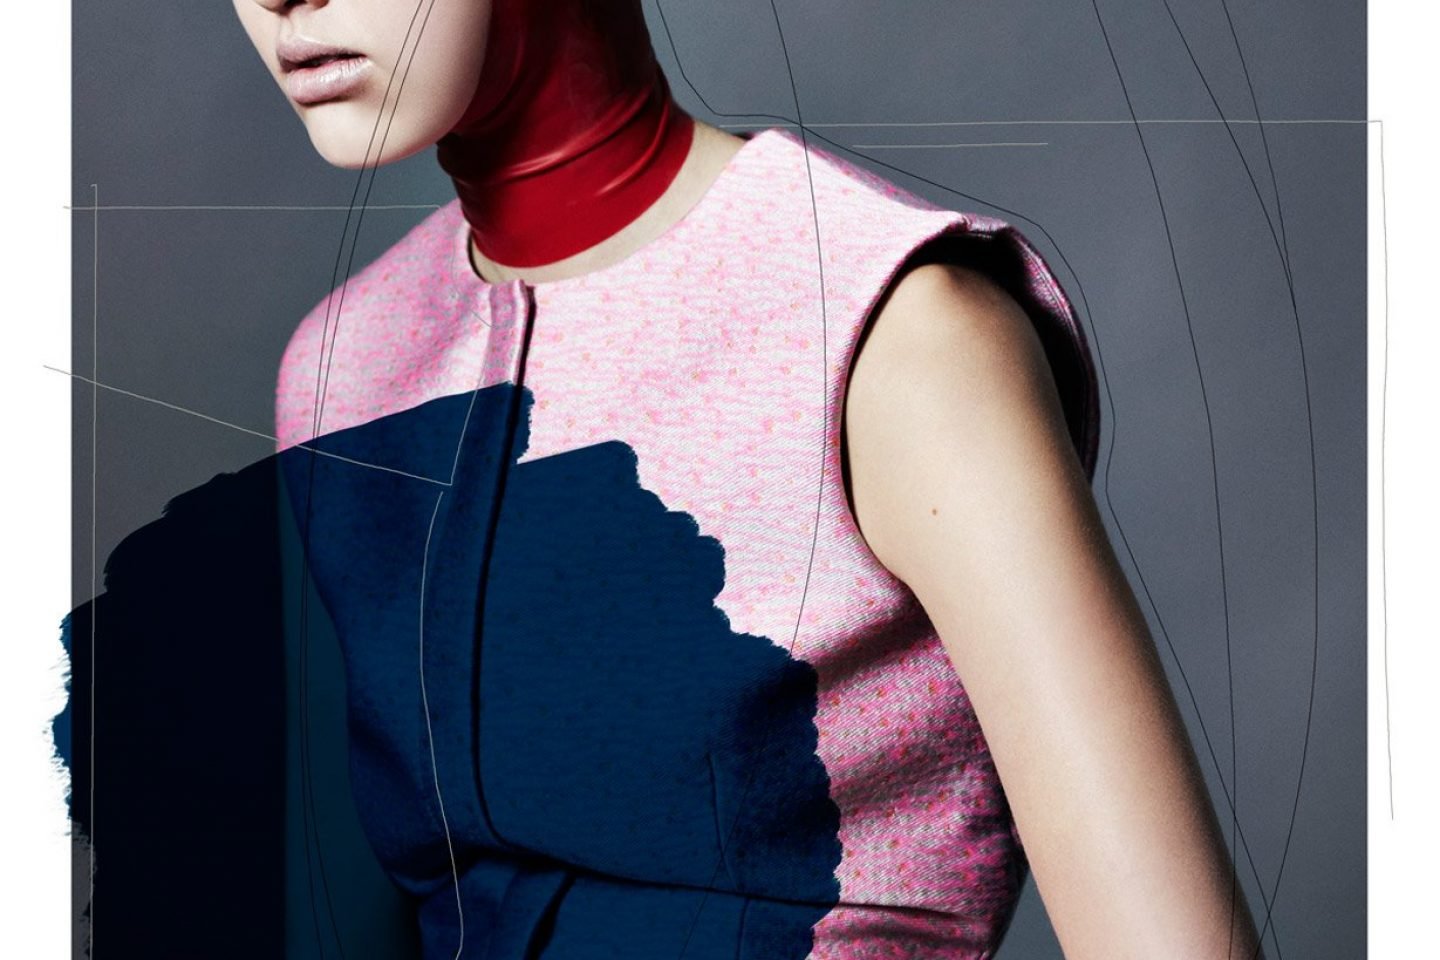 Léa Nielsen's Fashionable Artwork - IGNANT